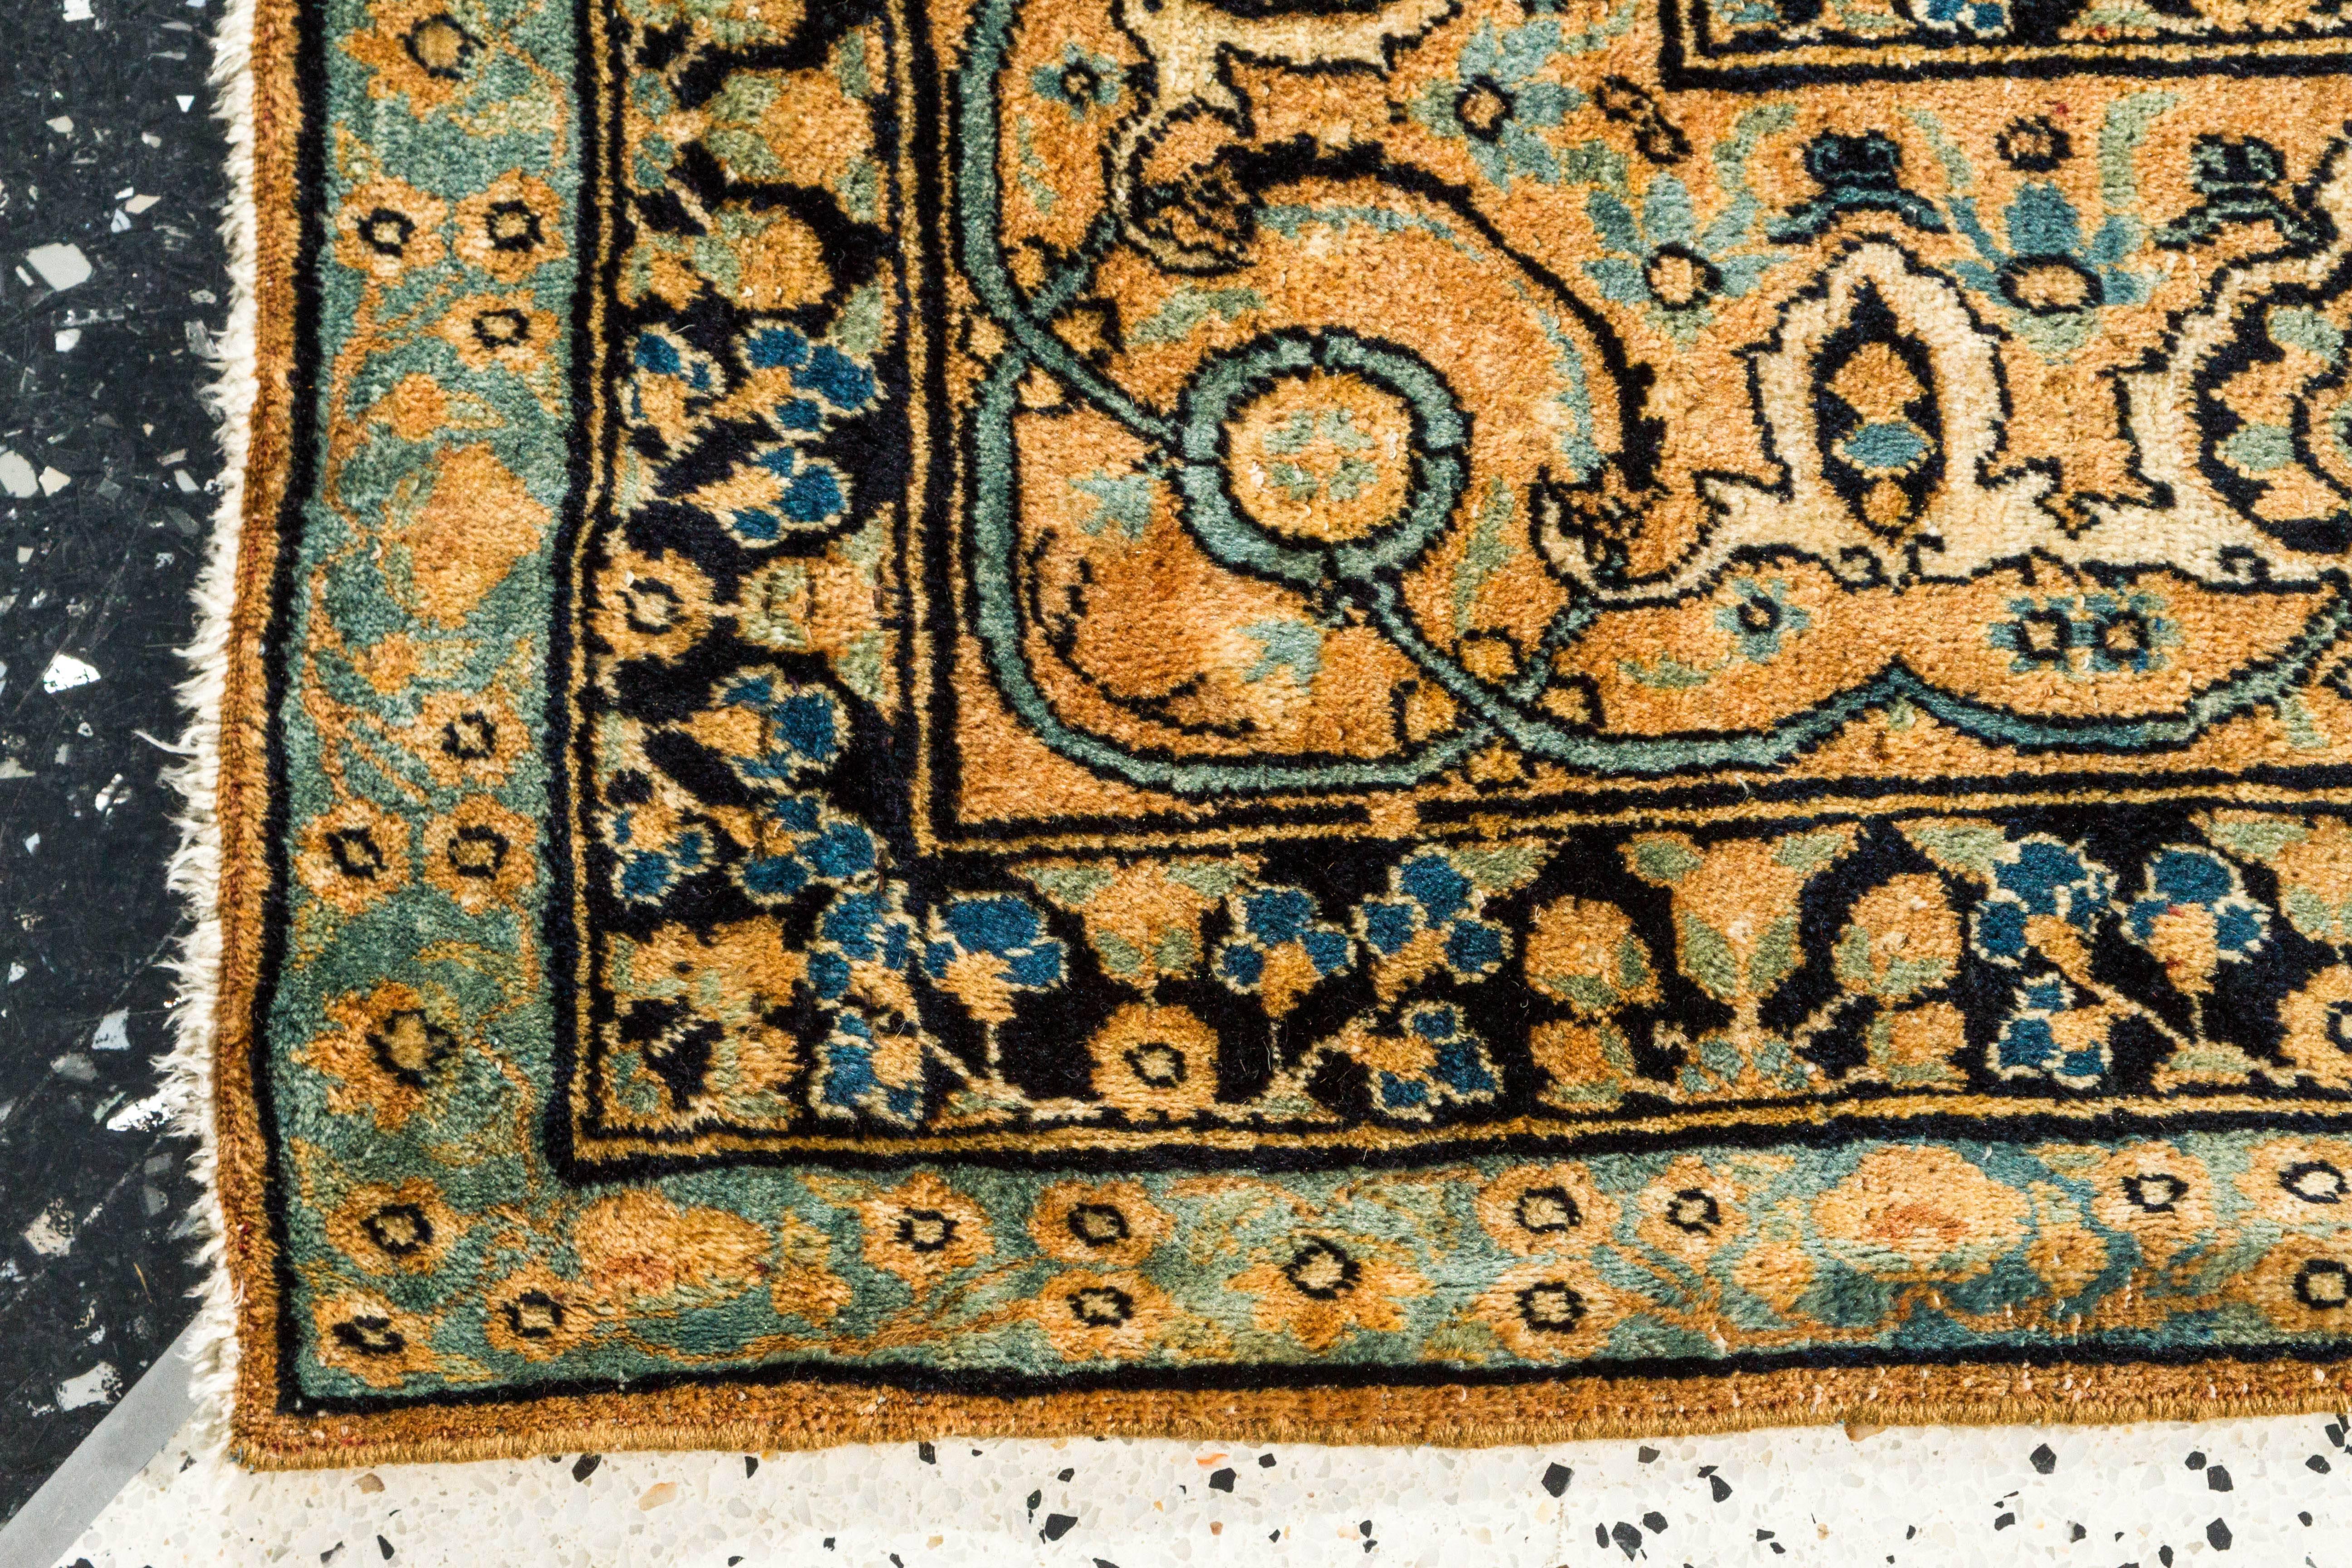 Antique Persian Tabriz
Measurement: 10'3